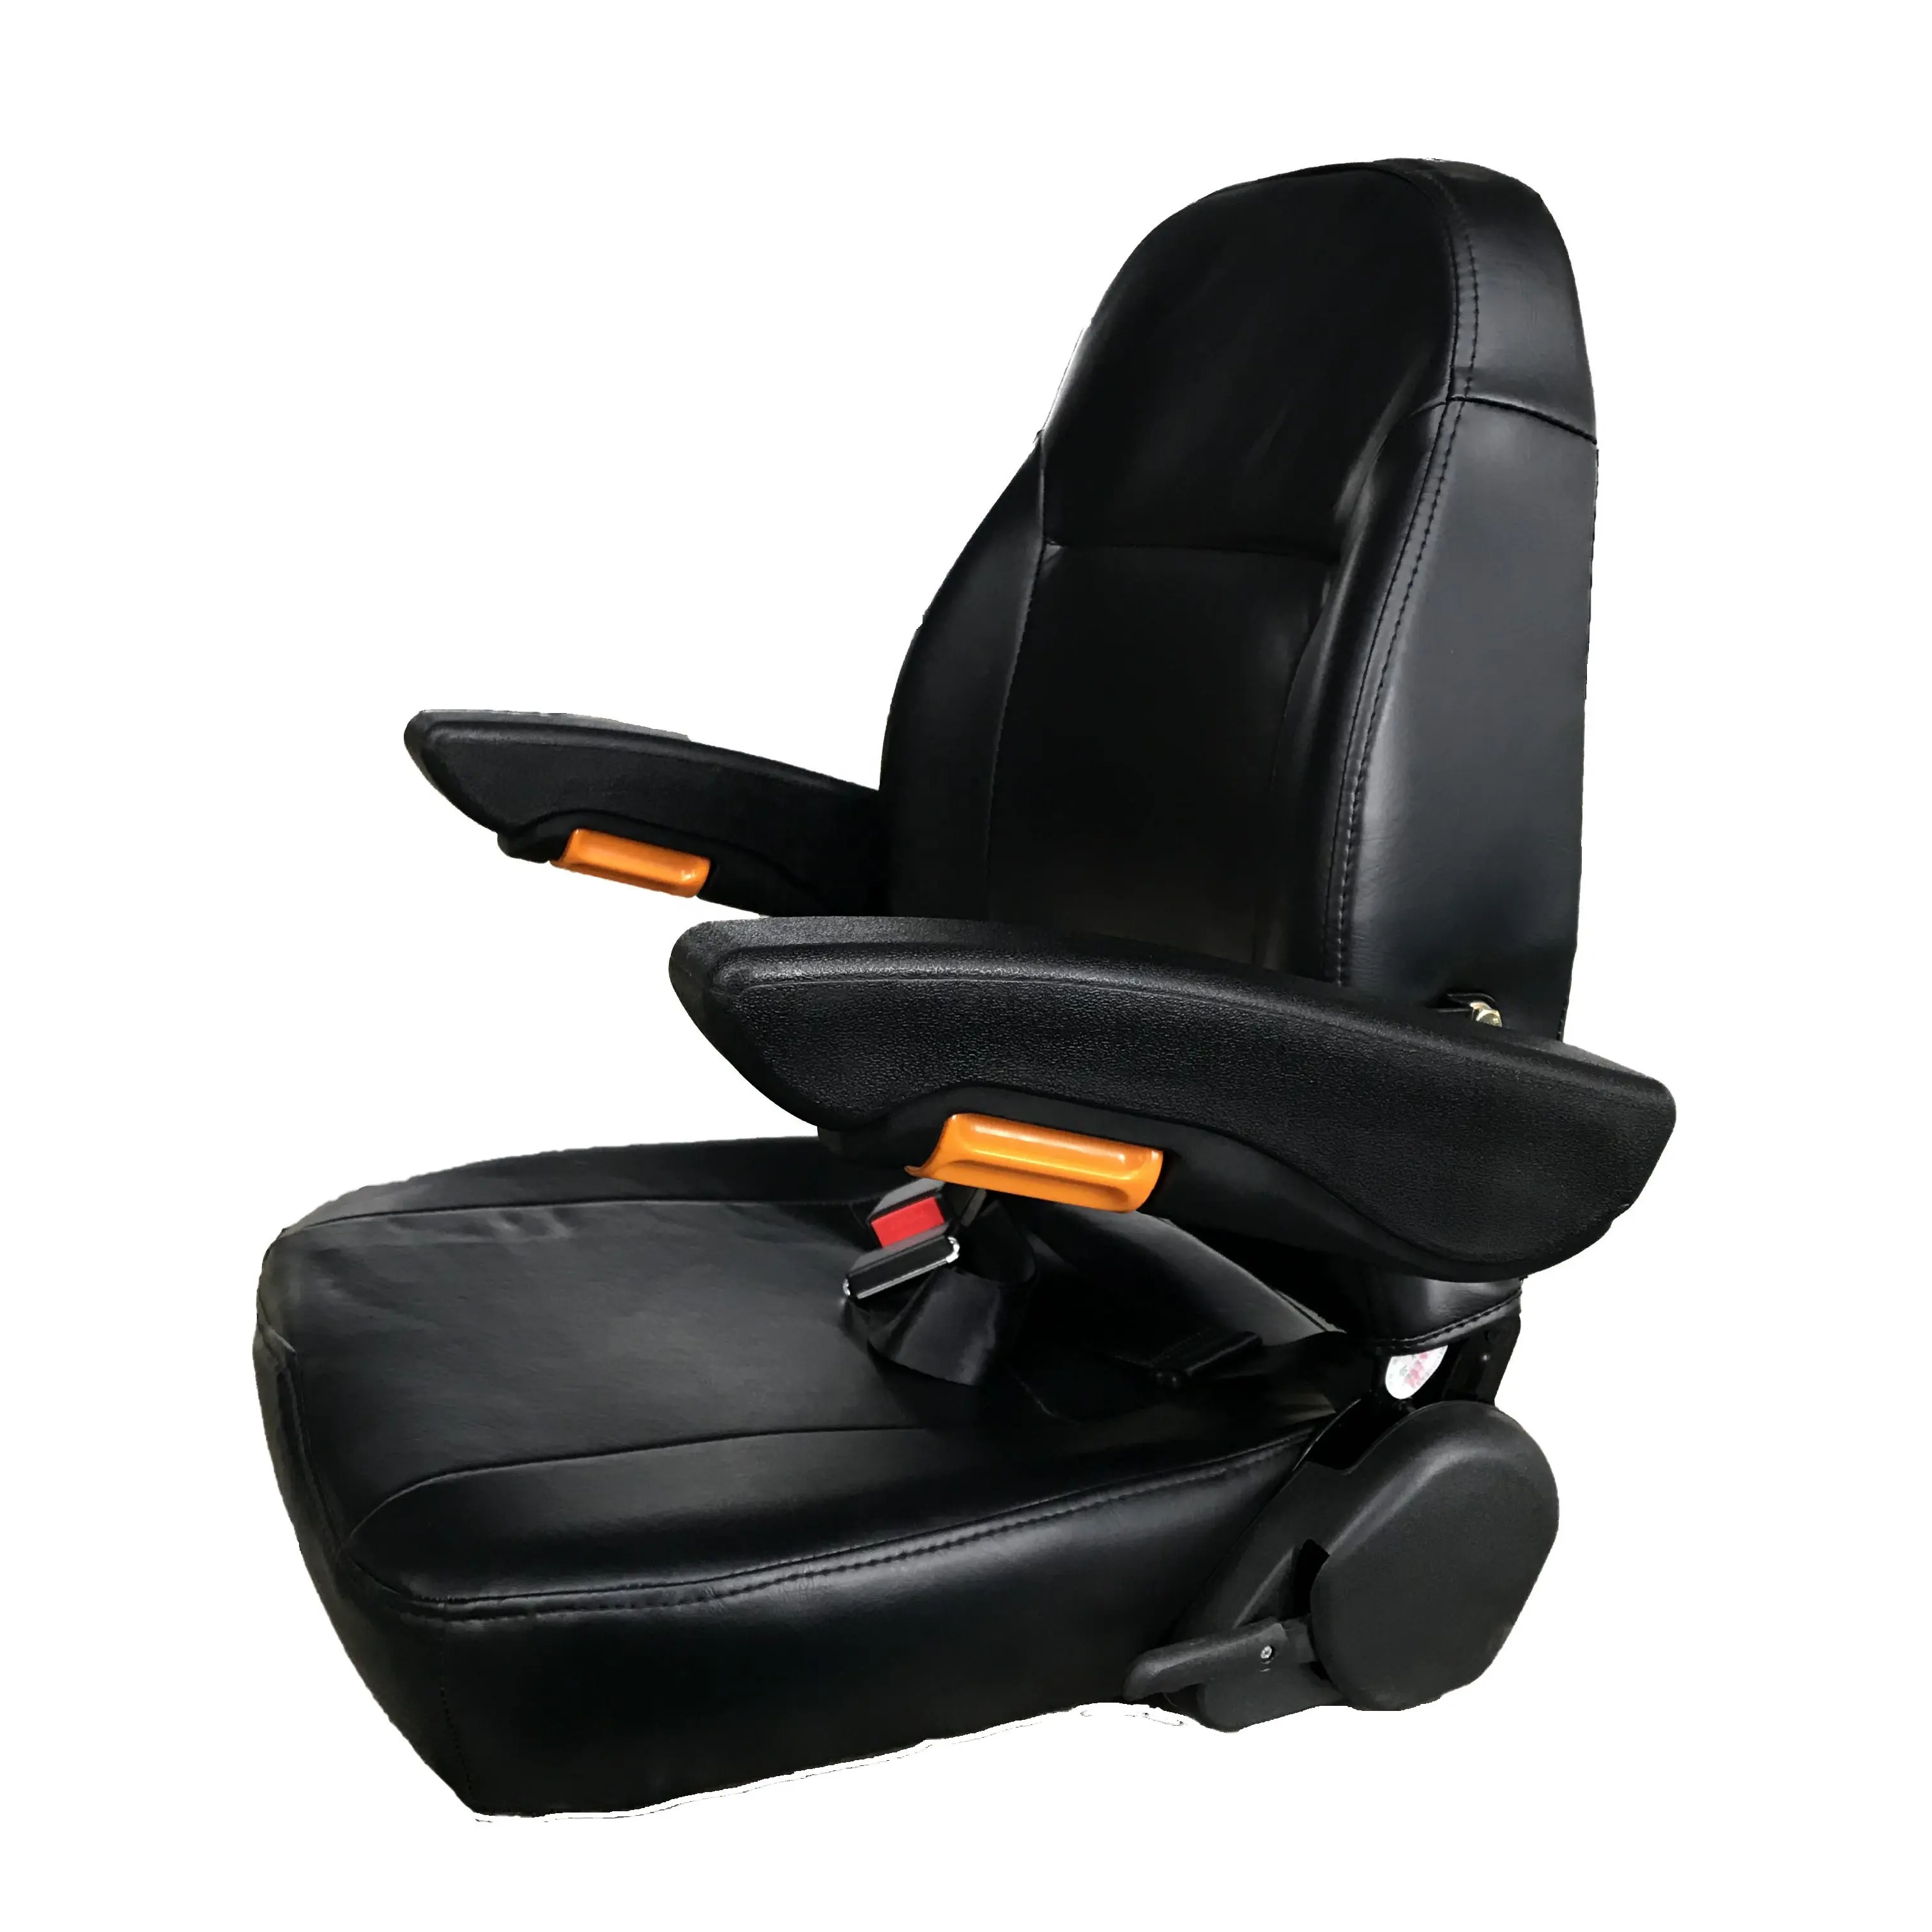 high quality adjustable comfortable forklift seat with armrests and safety belt optional